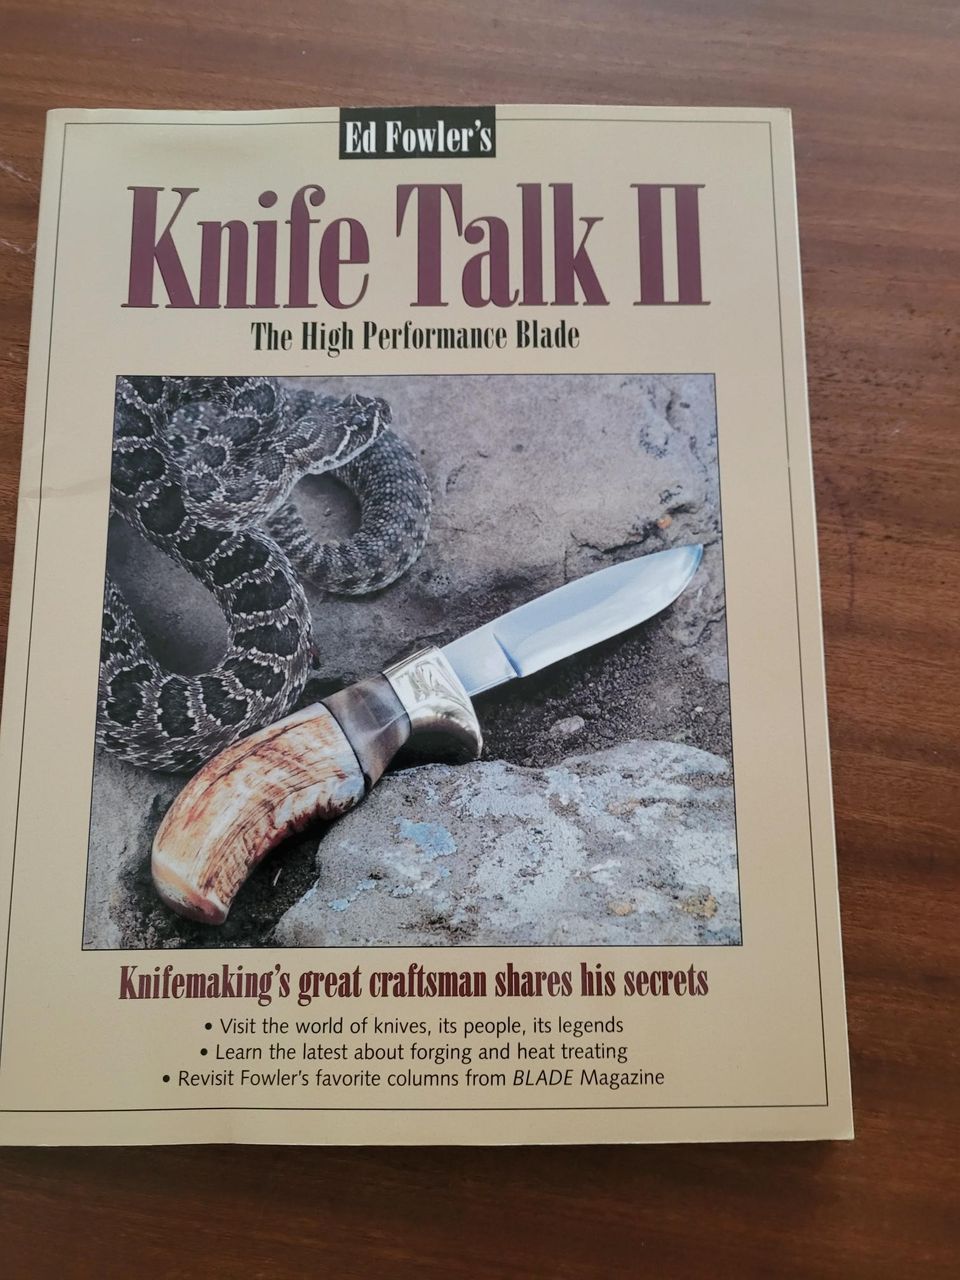 Ed Fowler's Knife talk II